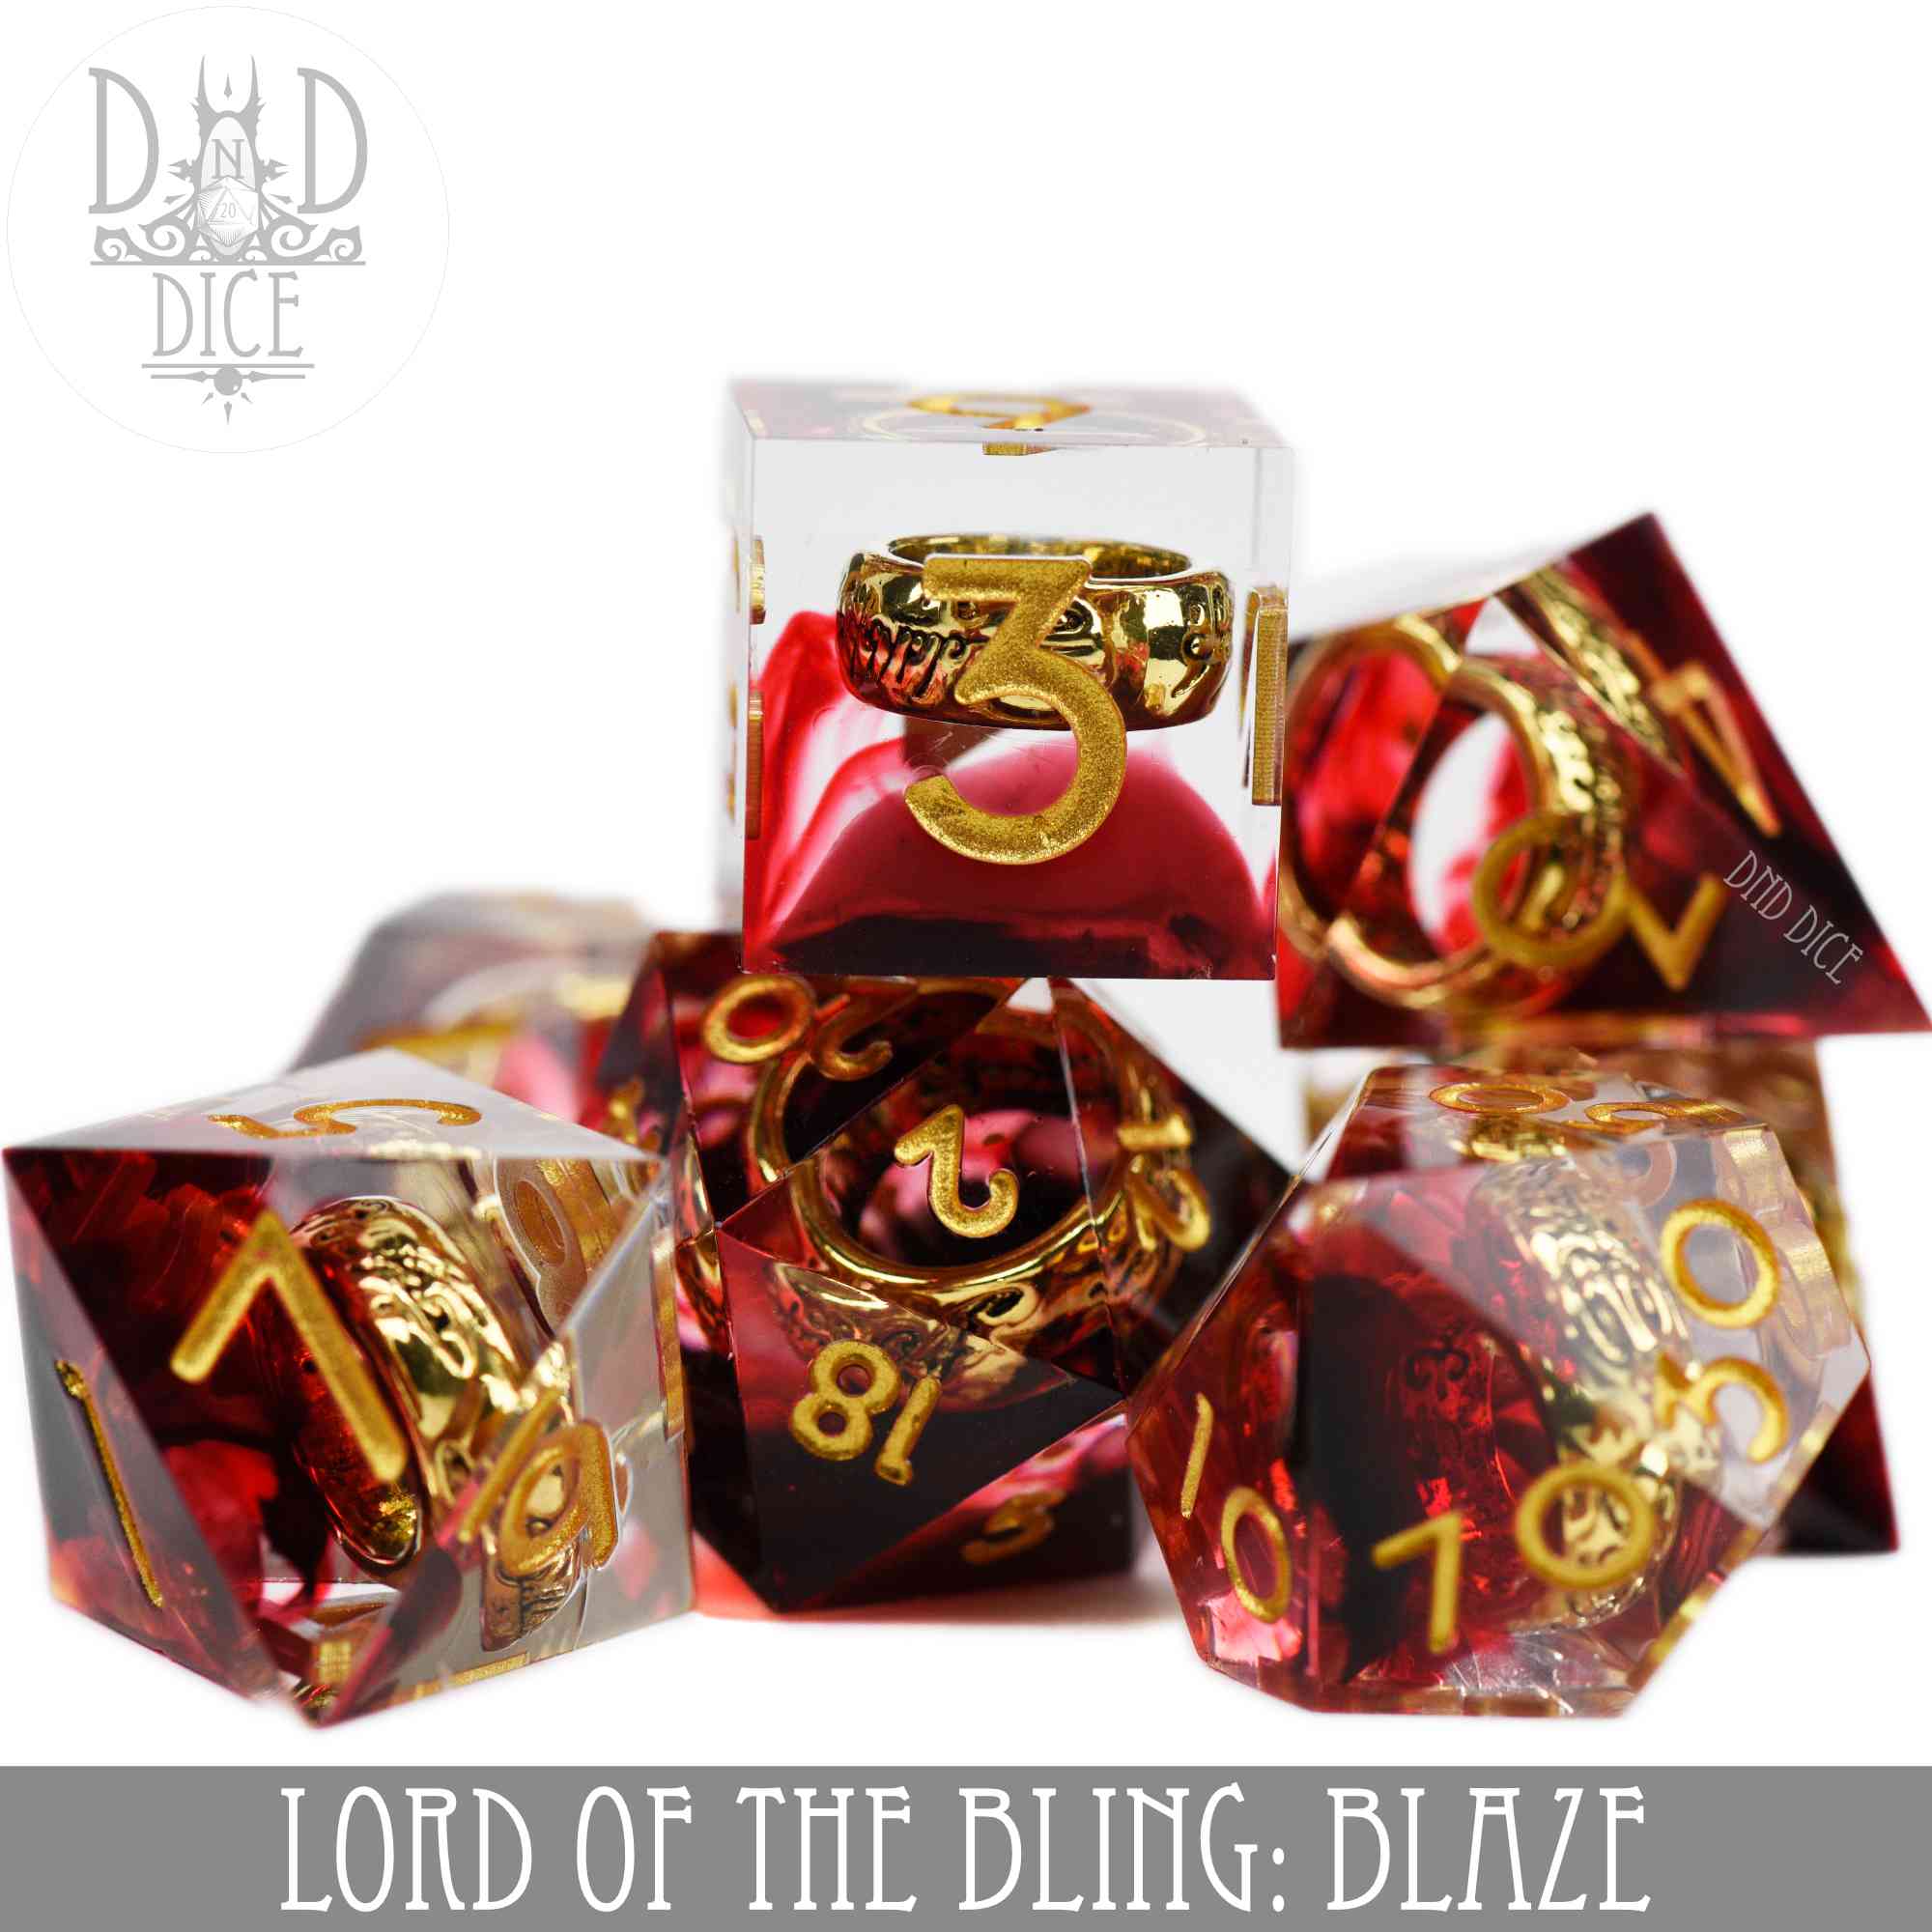 Lord of the Bling: Blaze Handmade Dice Set